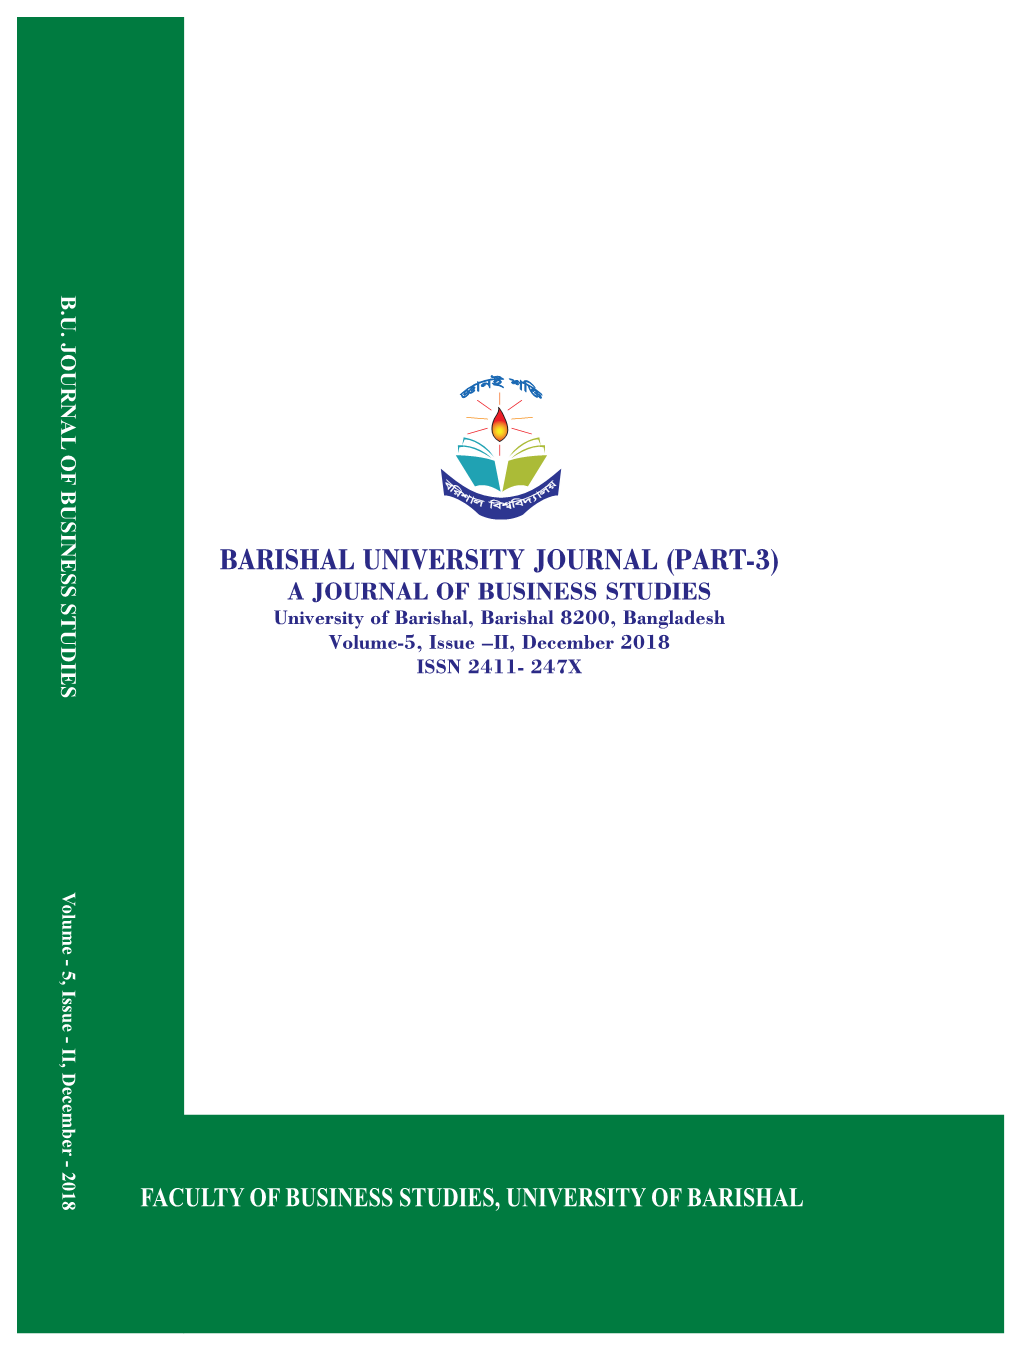 Barishal University Journal (Part-3)